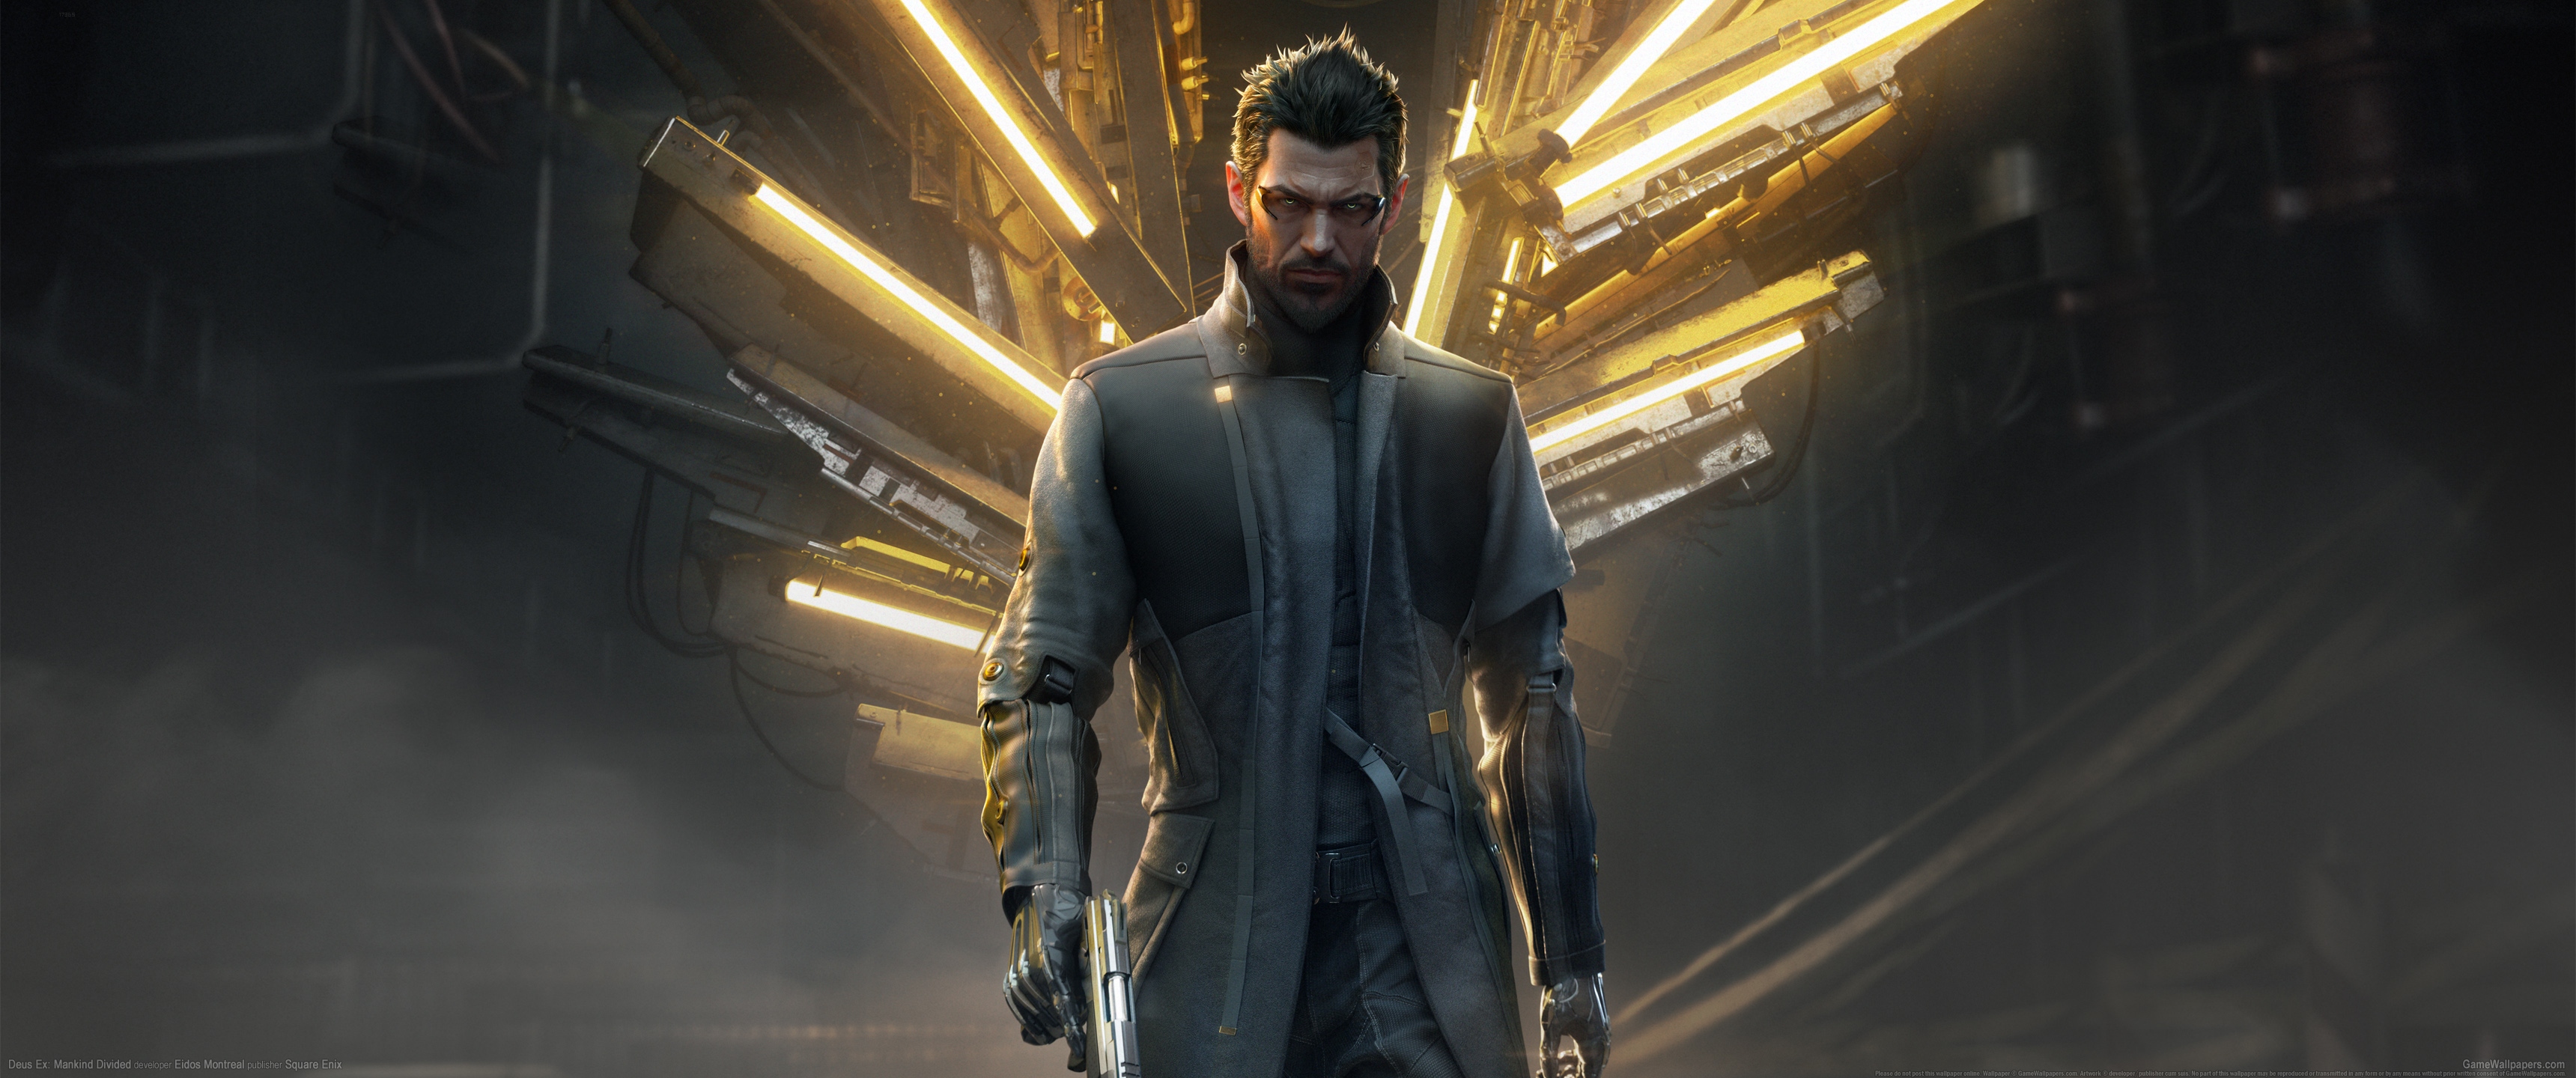 General 3440x1440 video games ultrawide Deus Ex: Mankind Divided cyberpunk Deus Ex PC gaming video game characters video game men Science Fiction Men gun weapon men